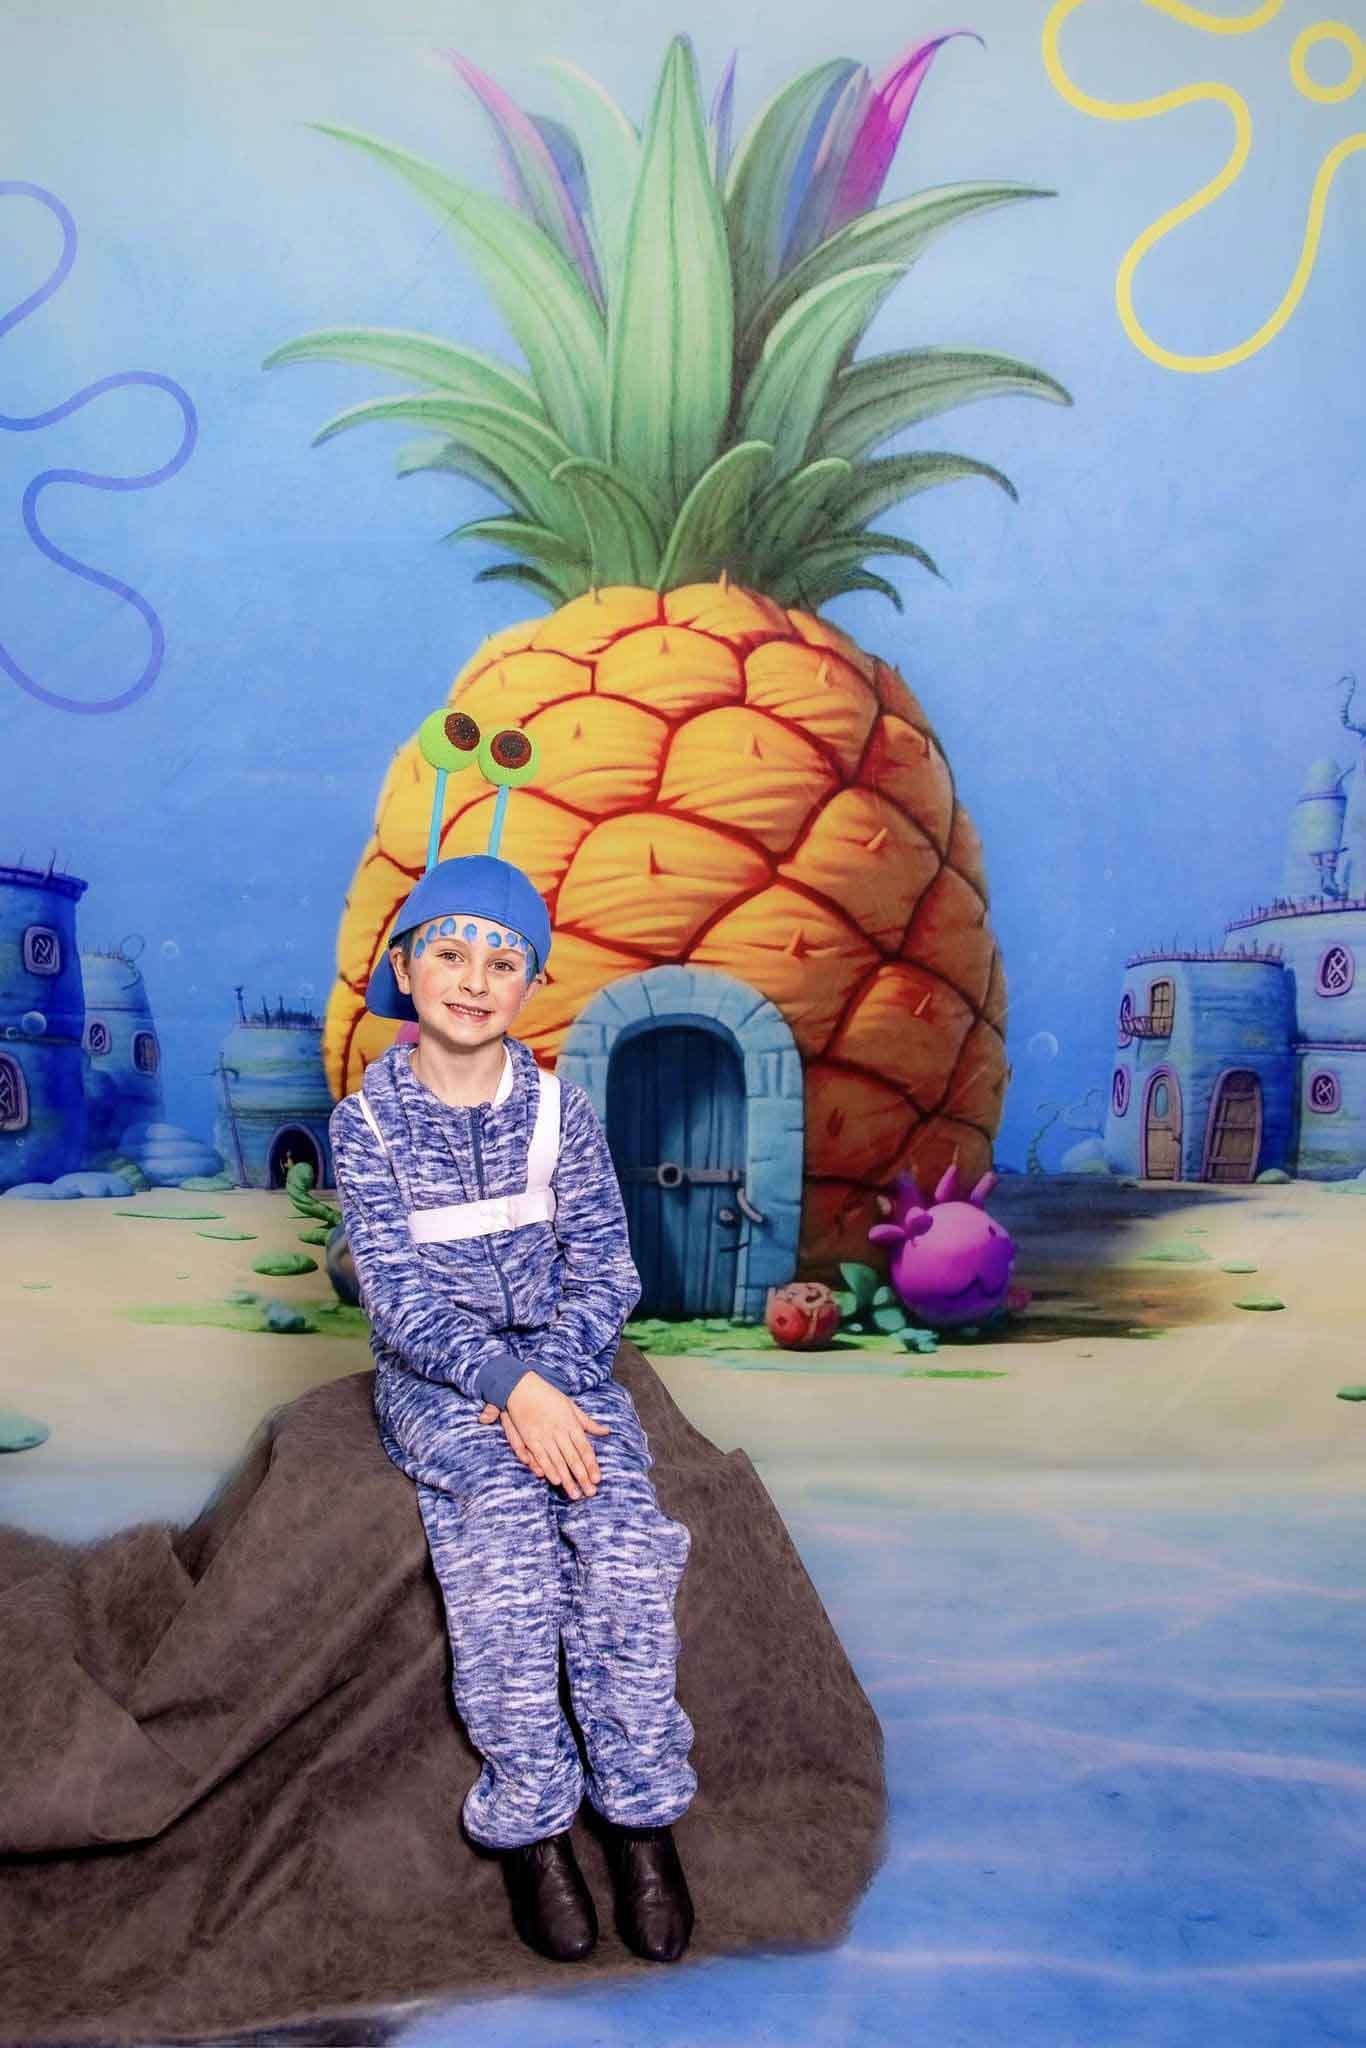 Kate Underwater World Pineapple House Backdrop+Blue Sea Floor Backdrop